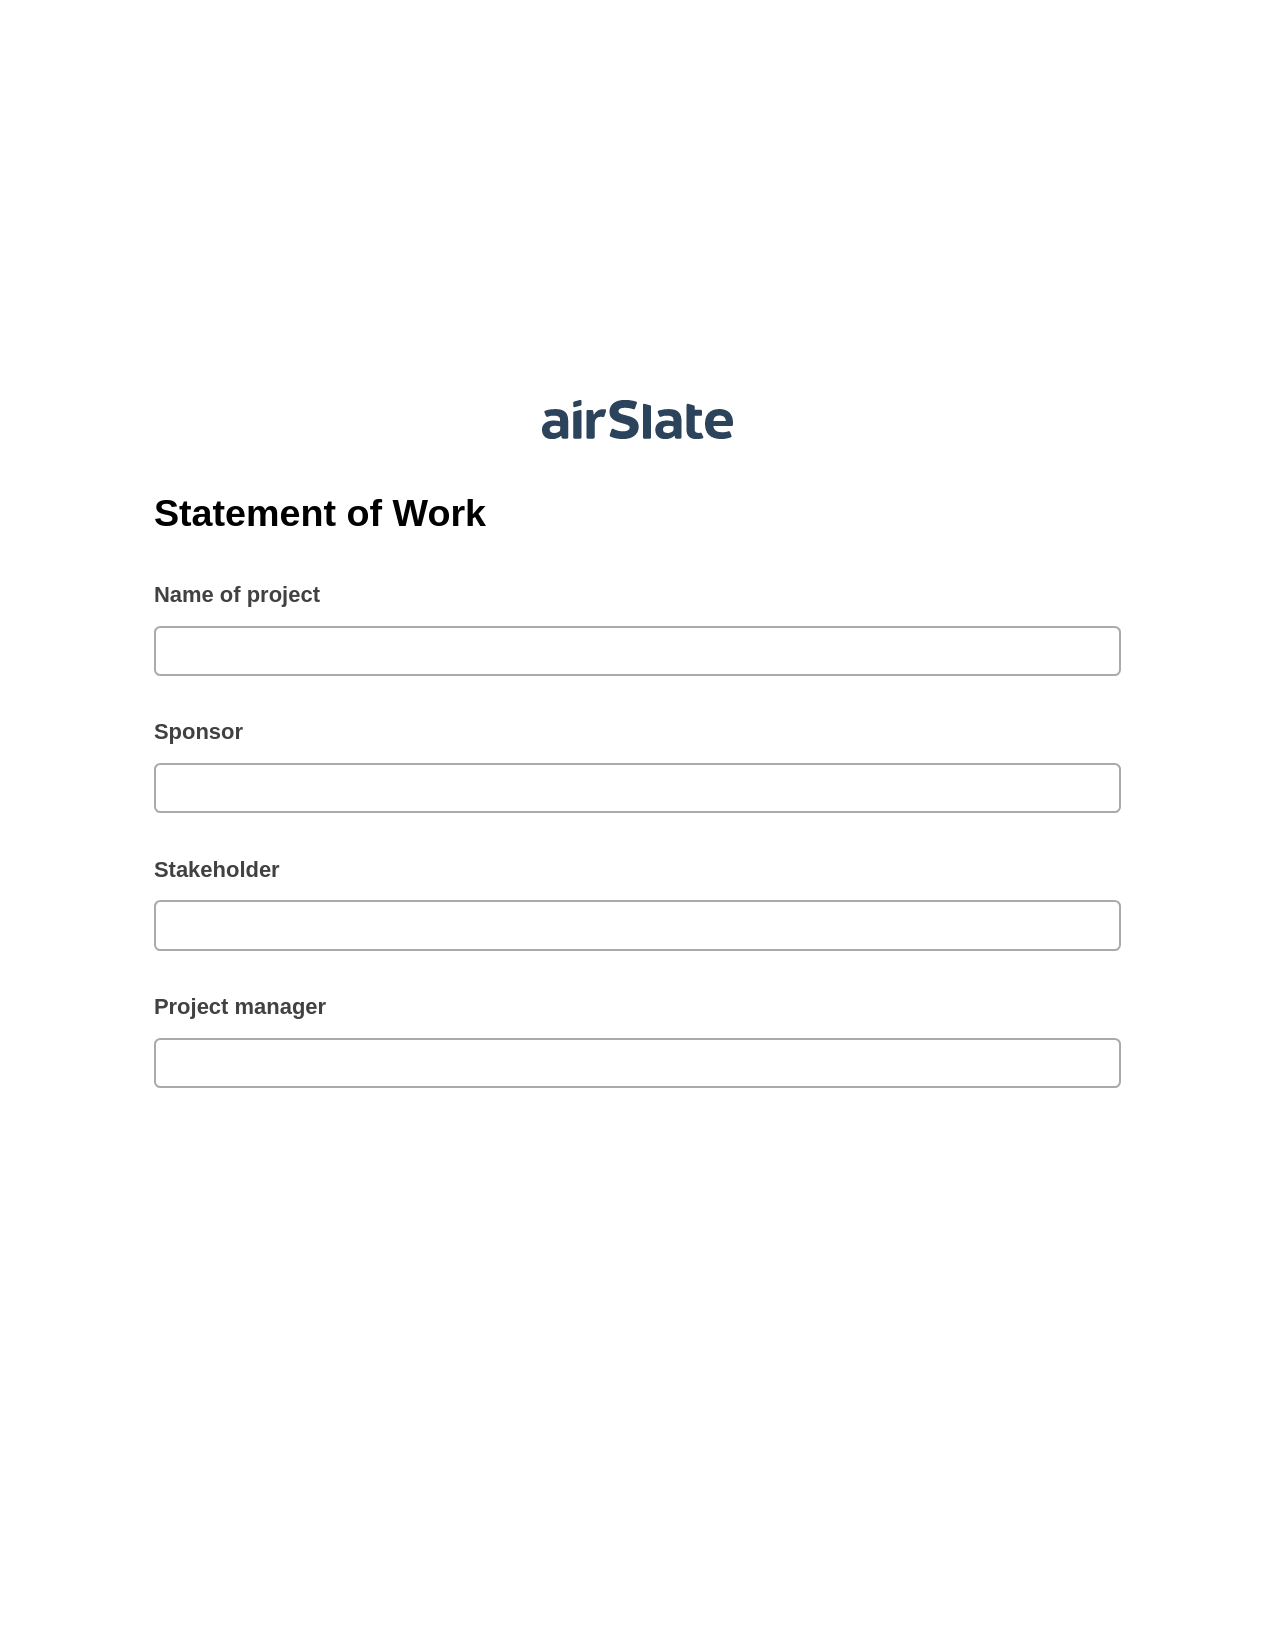 Multirole Statement of Work Pre-fill from CSV File Bot, Create slate bot, Post-finish Document Bot